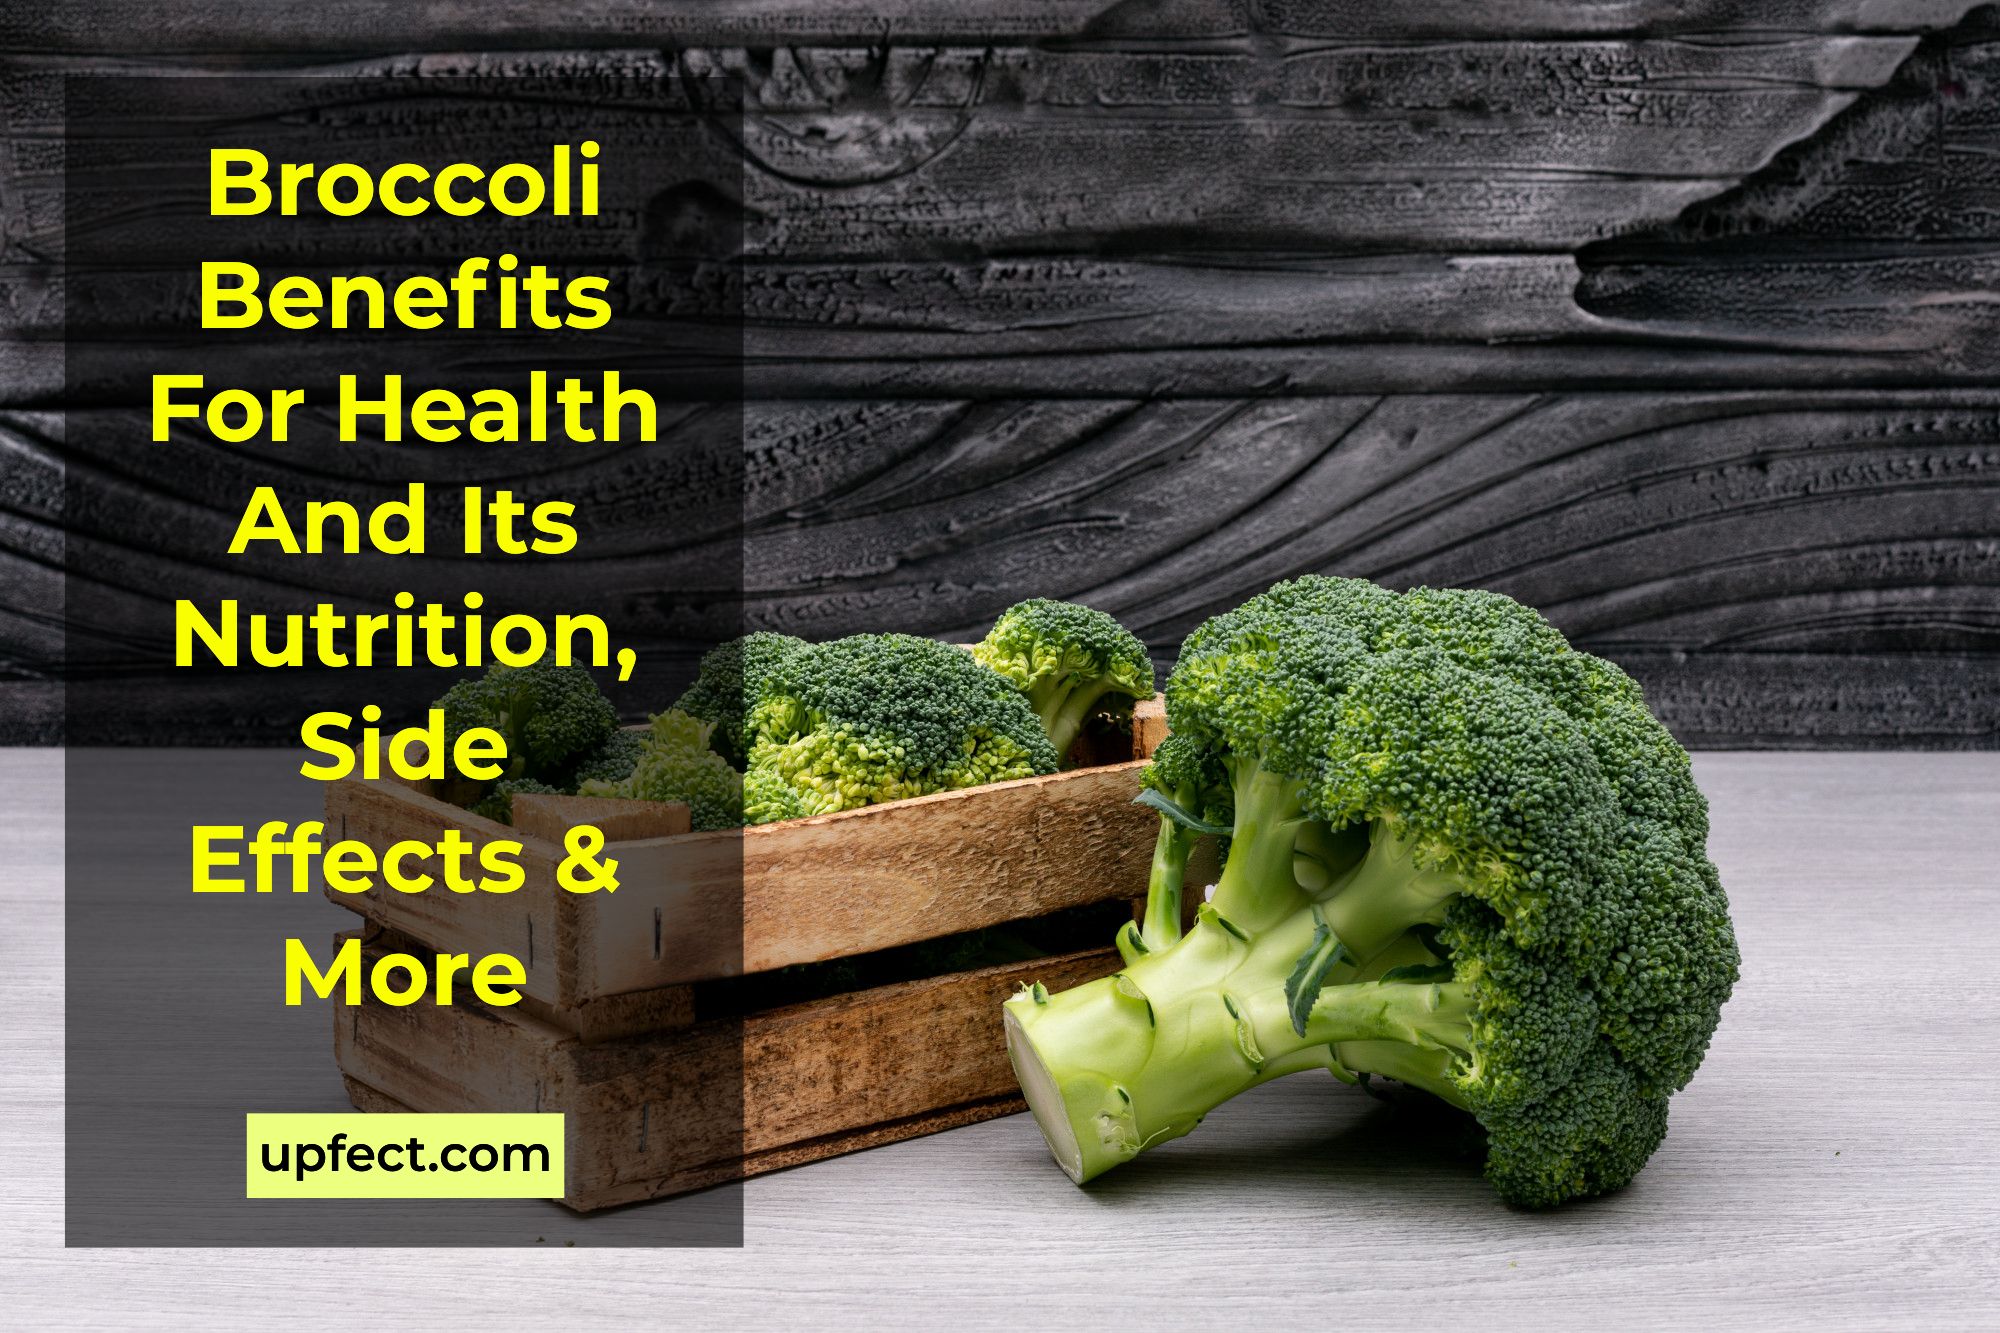 Broccoli Benefits For Health